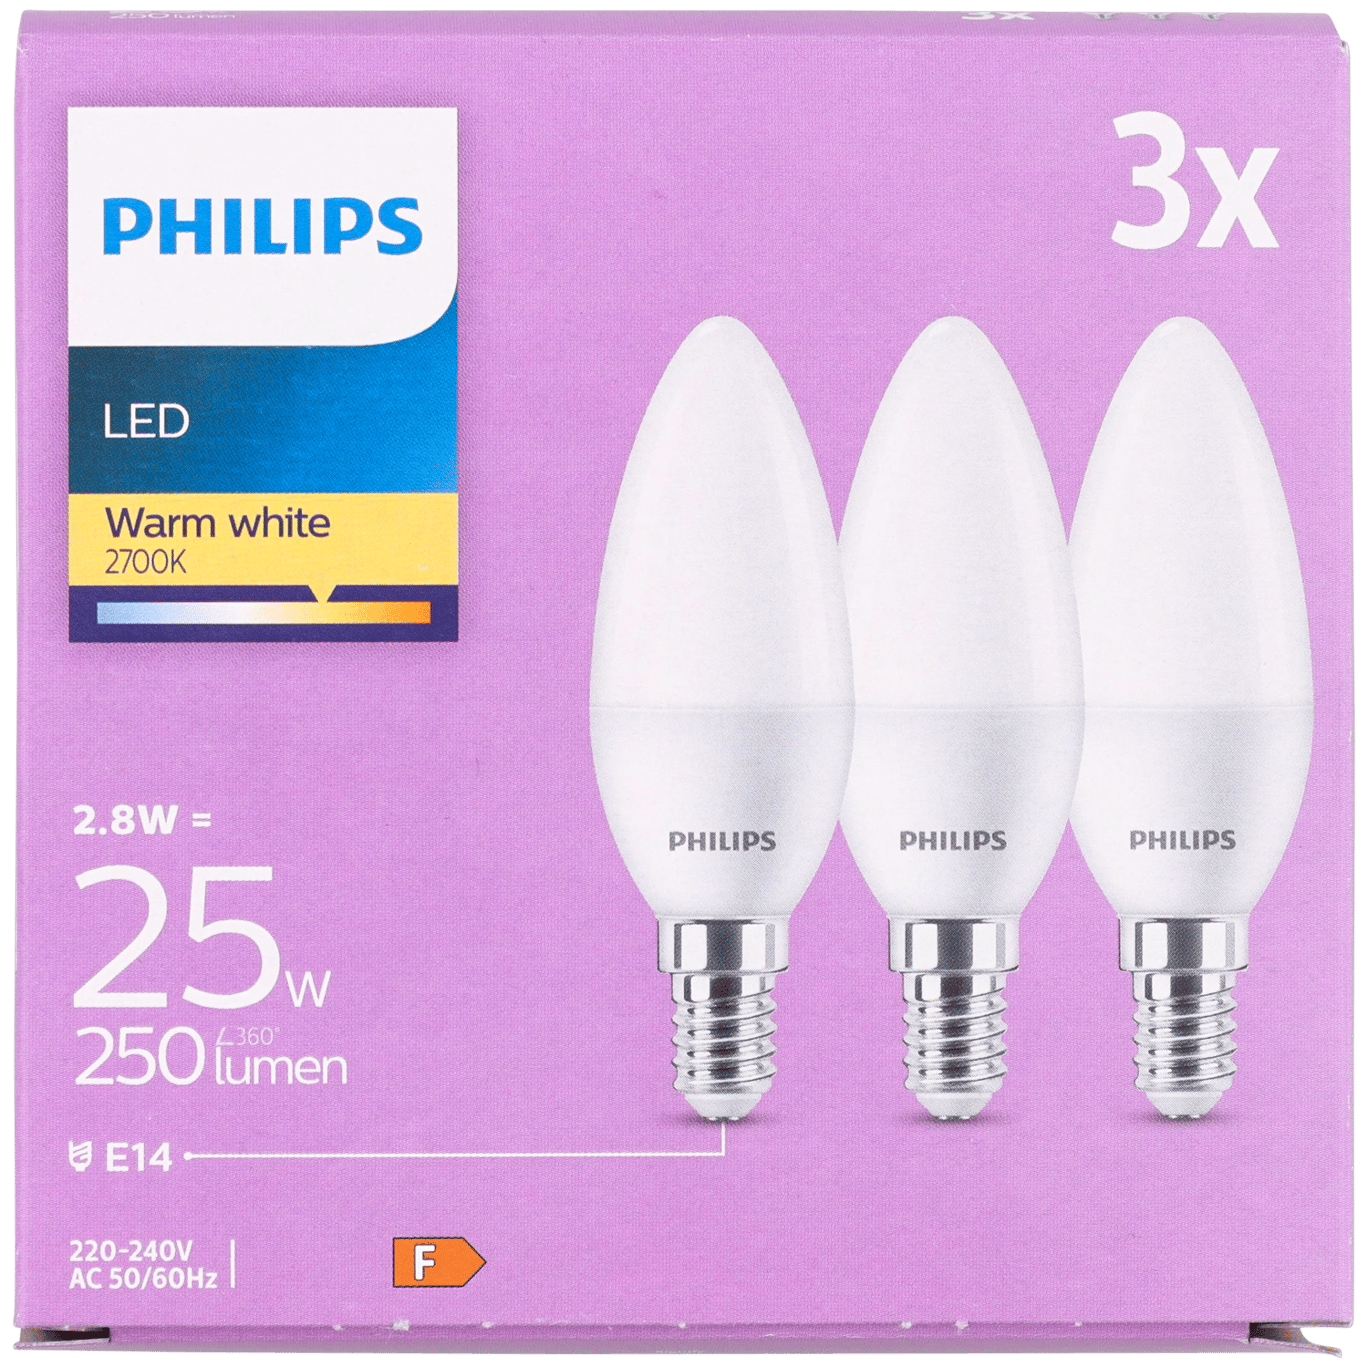 levenslang Gematigd Productiviteit Philips kaarslamp | Action.com